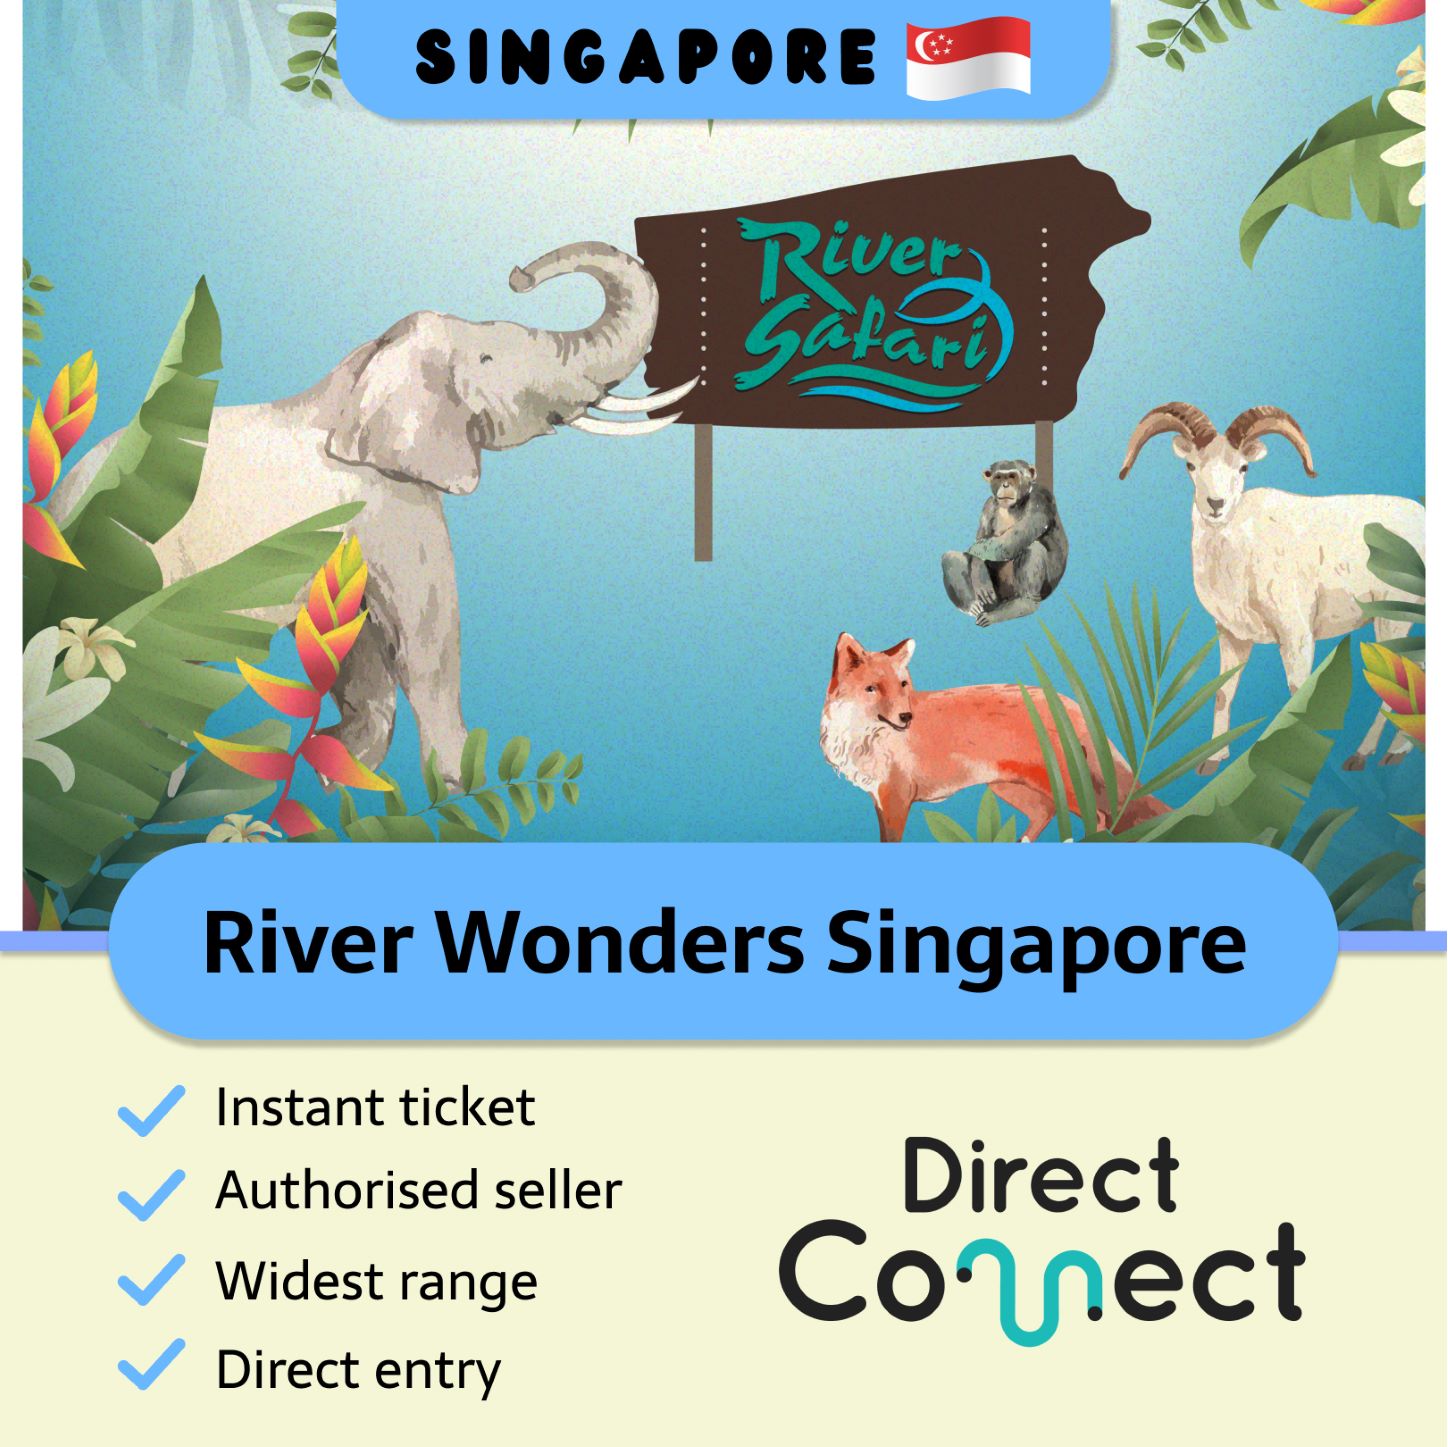 River Wonders Safari Singapore Outdoor Nature Animals Wildlife Attractions  Tickets Vouchers Travel Discount Deal Sale | Lazada Singapore